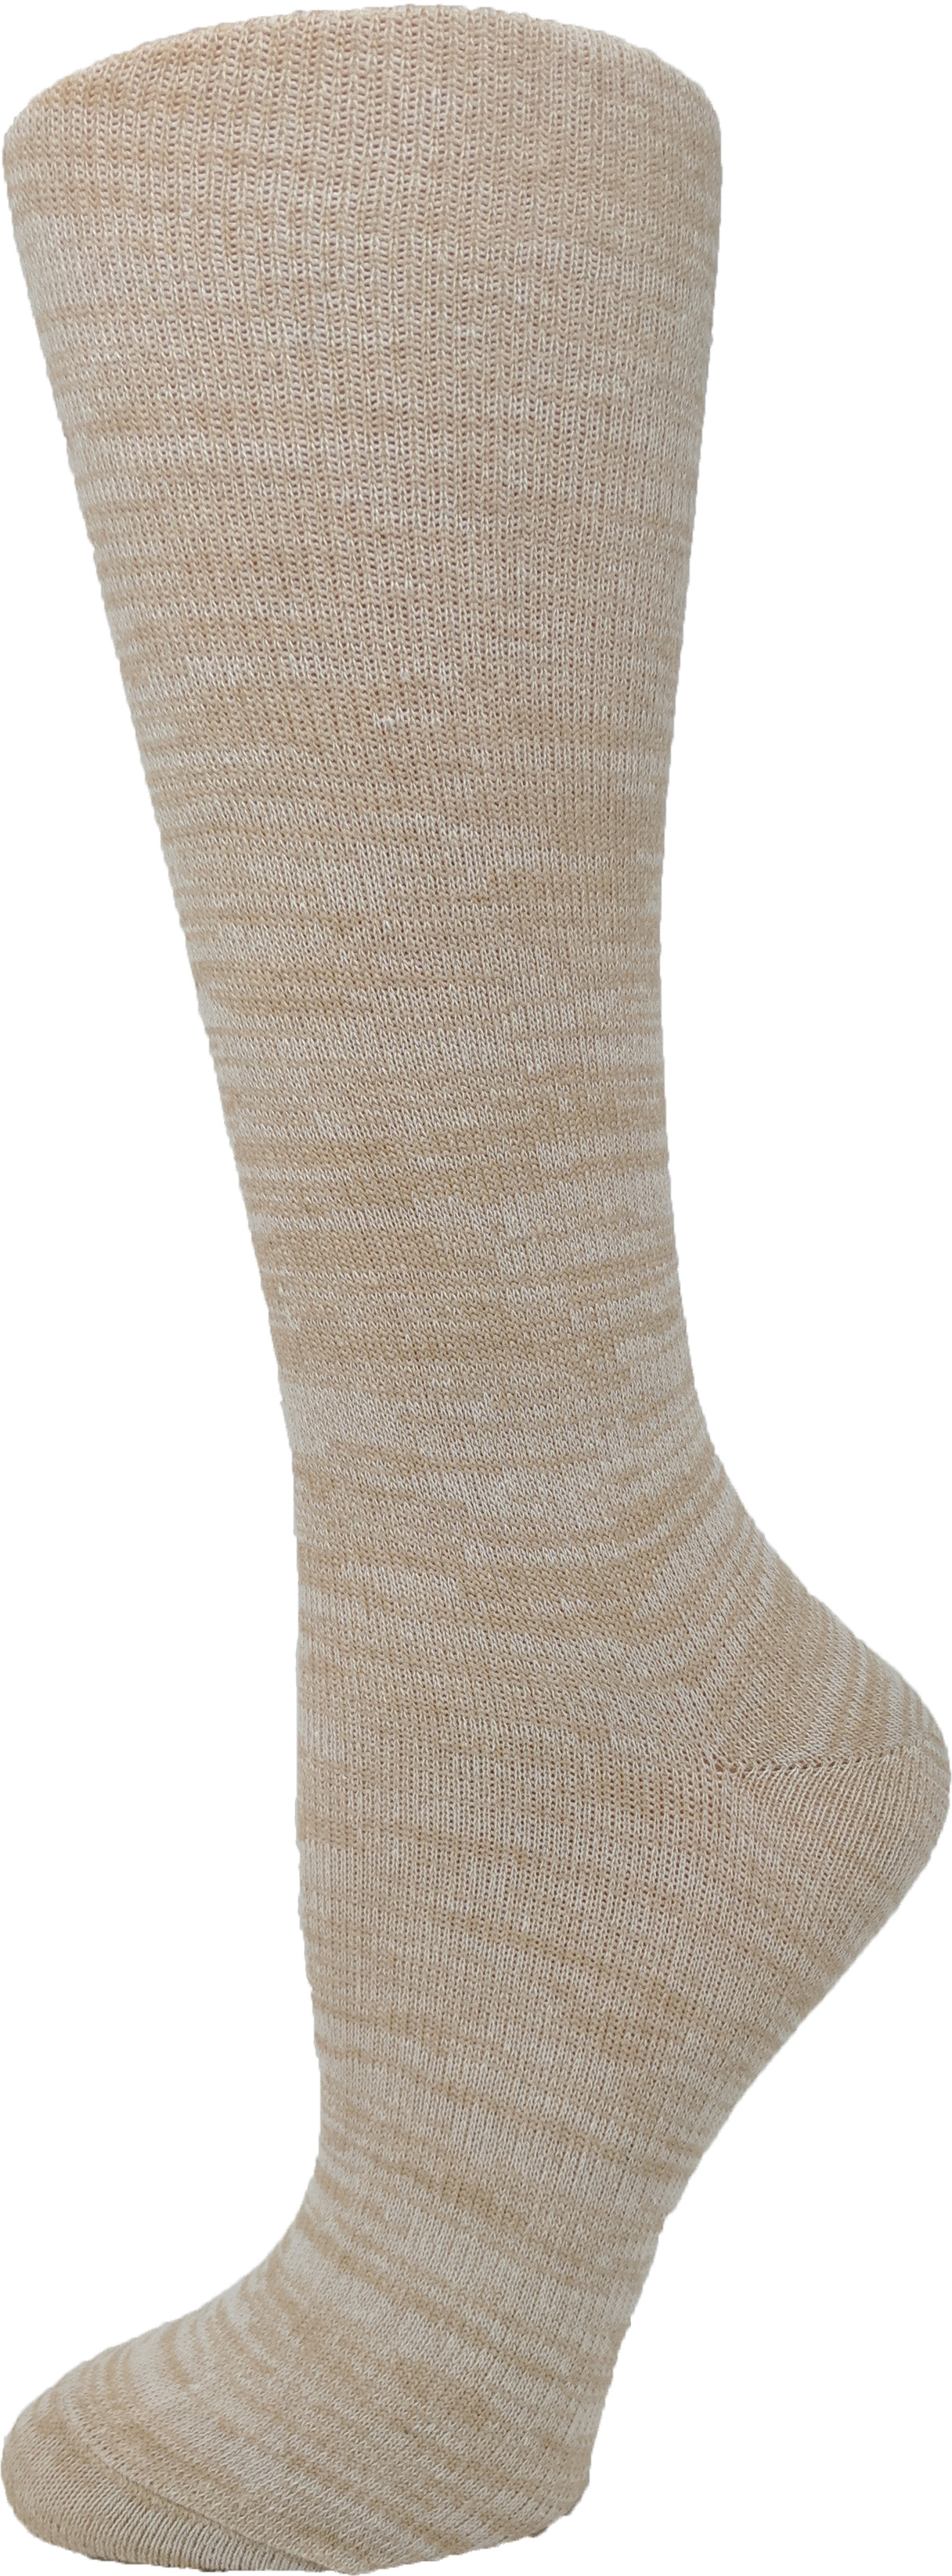 Buy Heather Khaki - Doctor's Choice 8-15 mmHg Knit Compression Socks ...